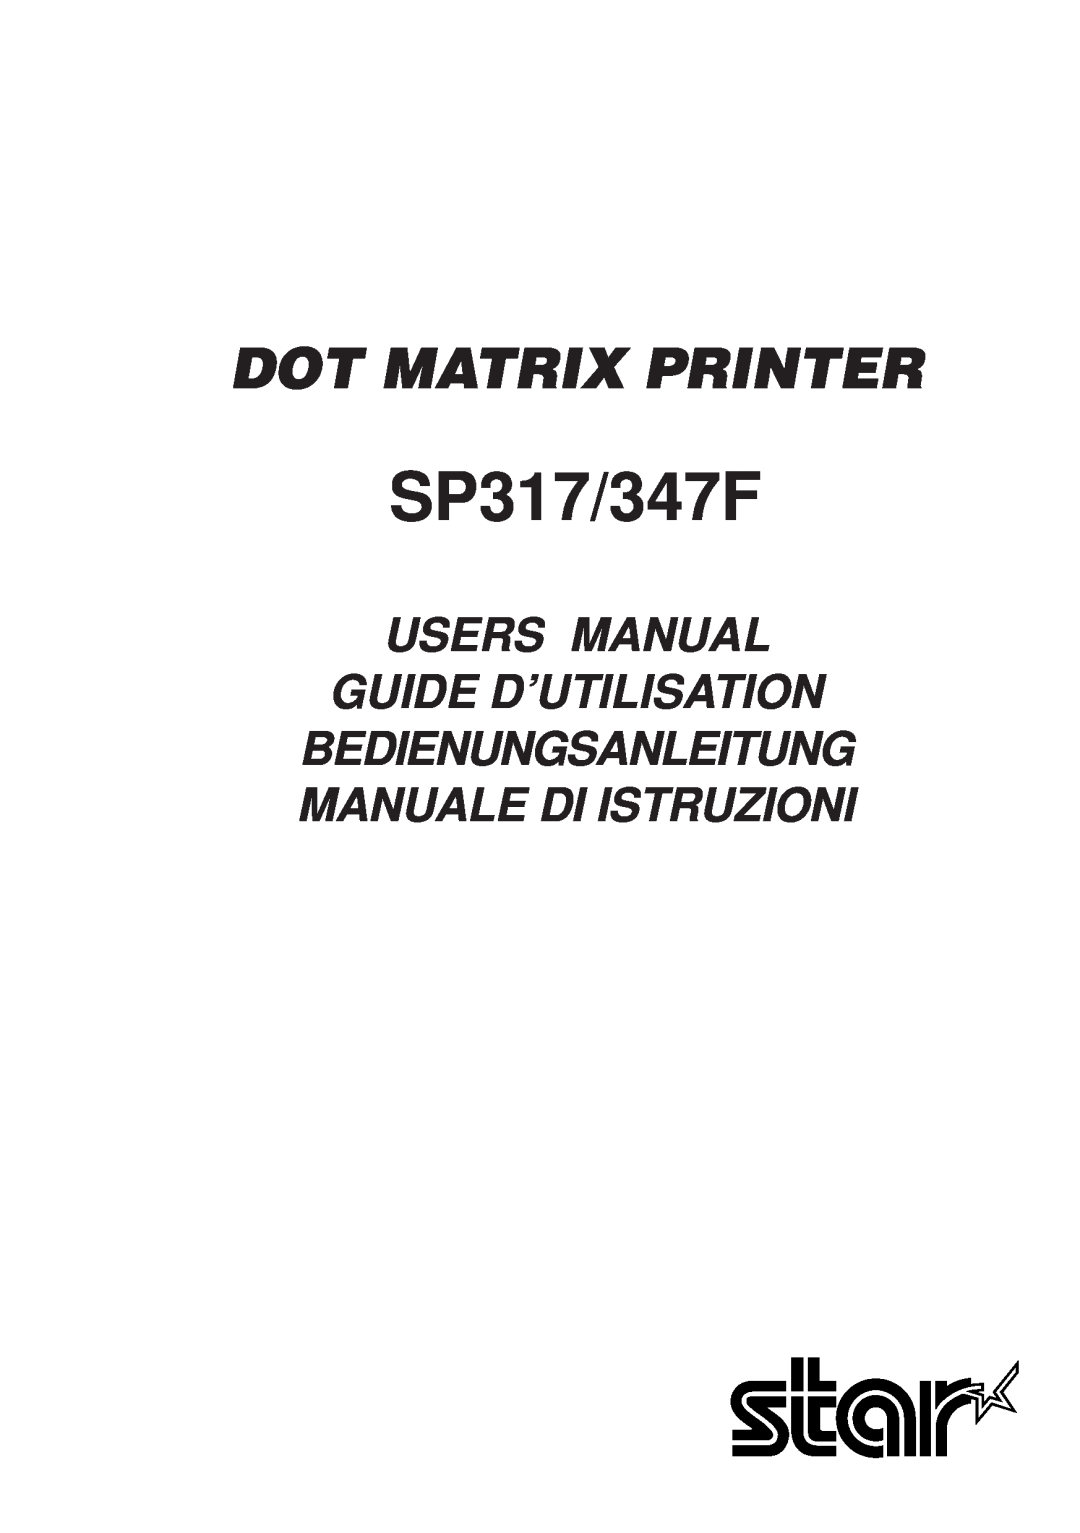 Star Micronics user manual SP317/347F, Dot Matrix Printer, Users Manual 